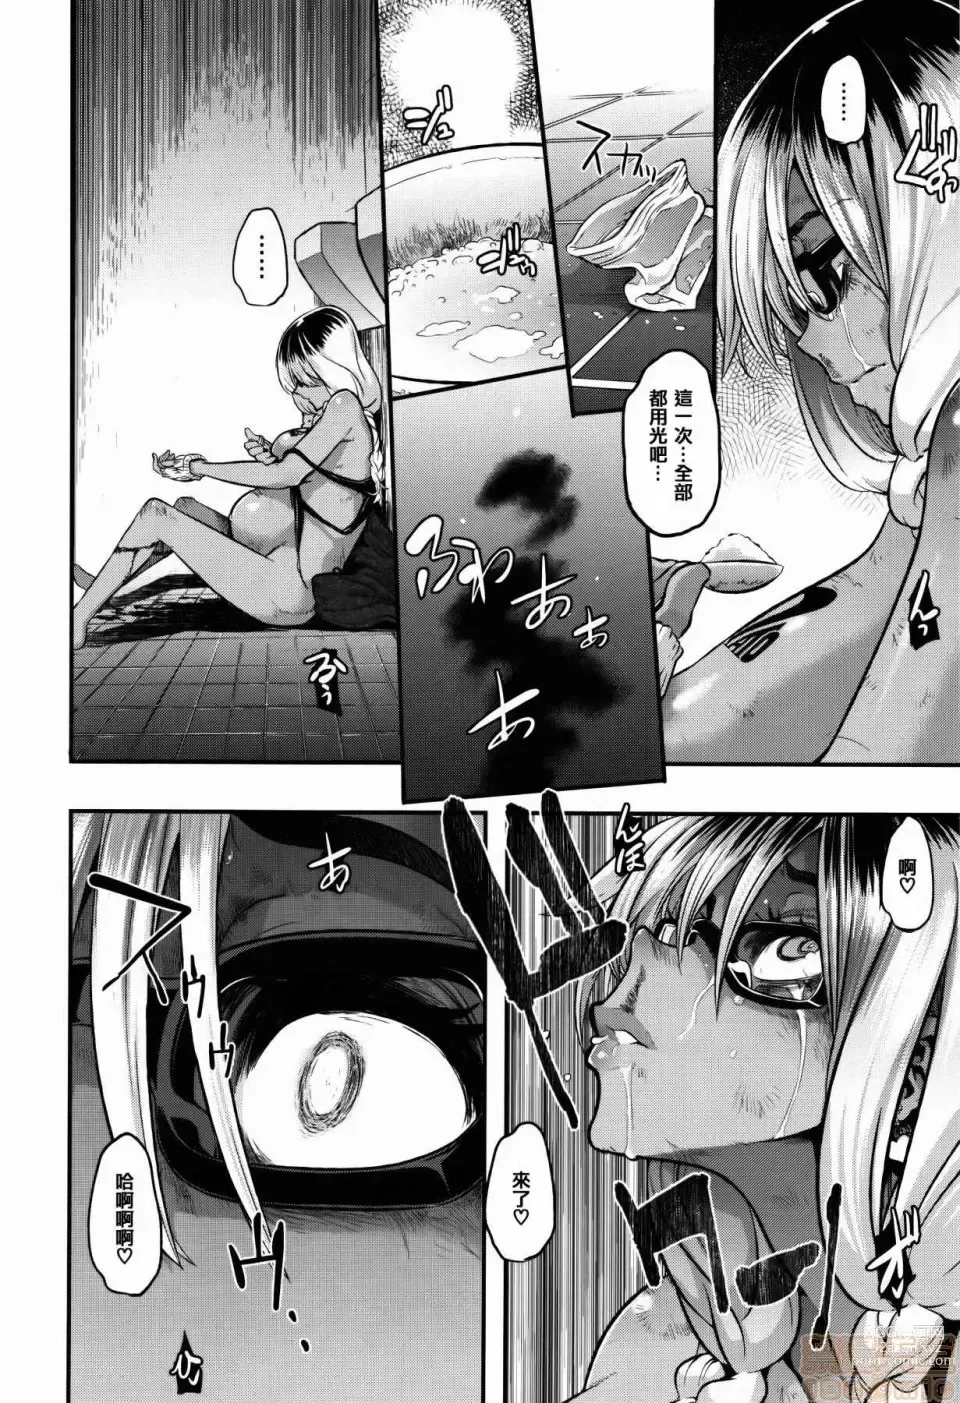 Page 240 of manga Henshin